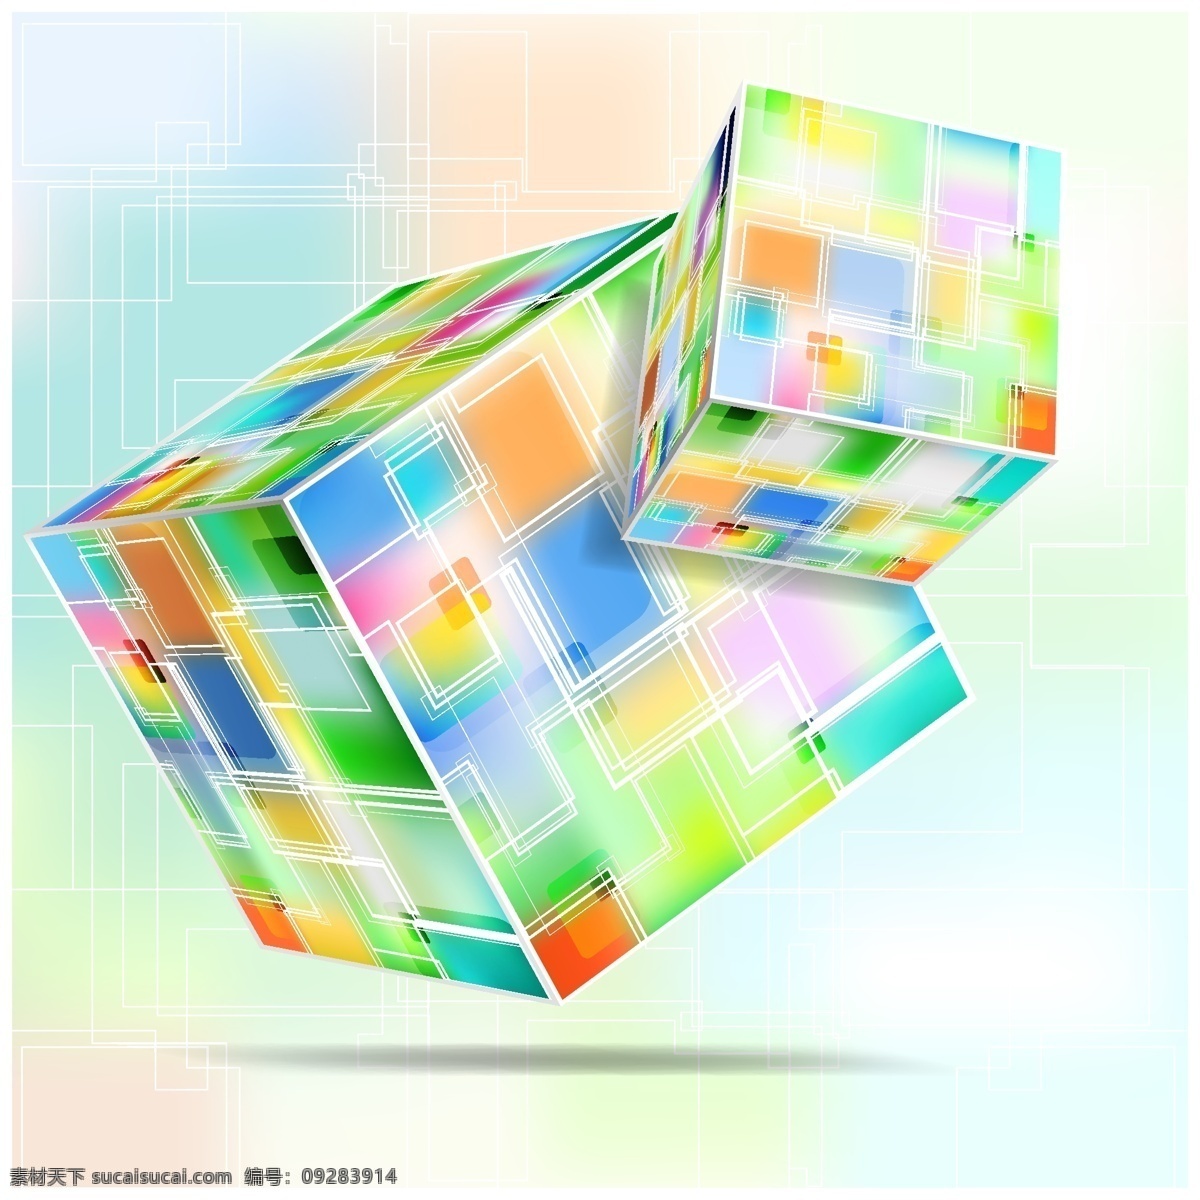 3d 立方体 背景 3d方块 3d立方体 矢量图 其他矢量图